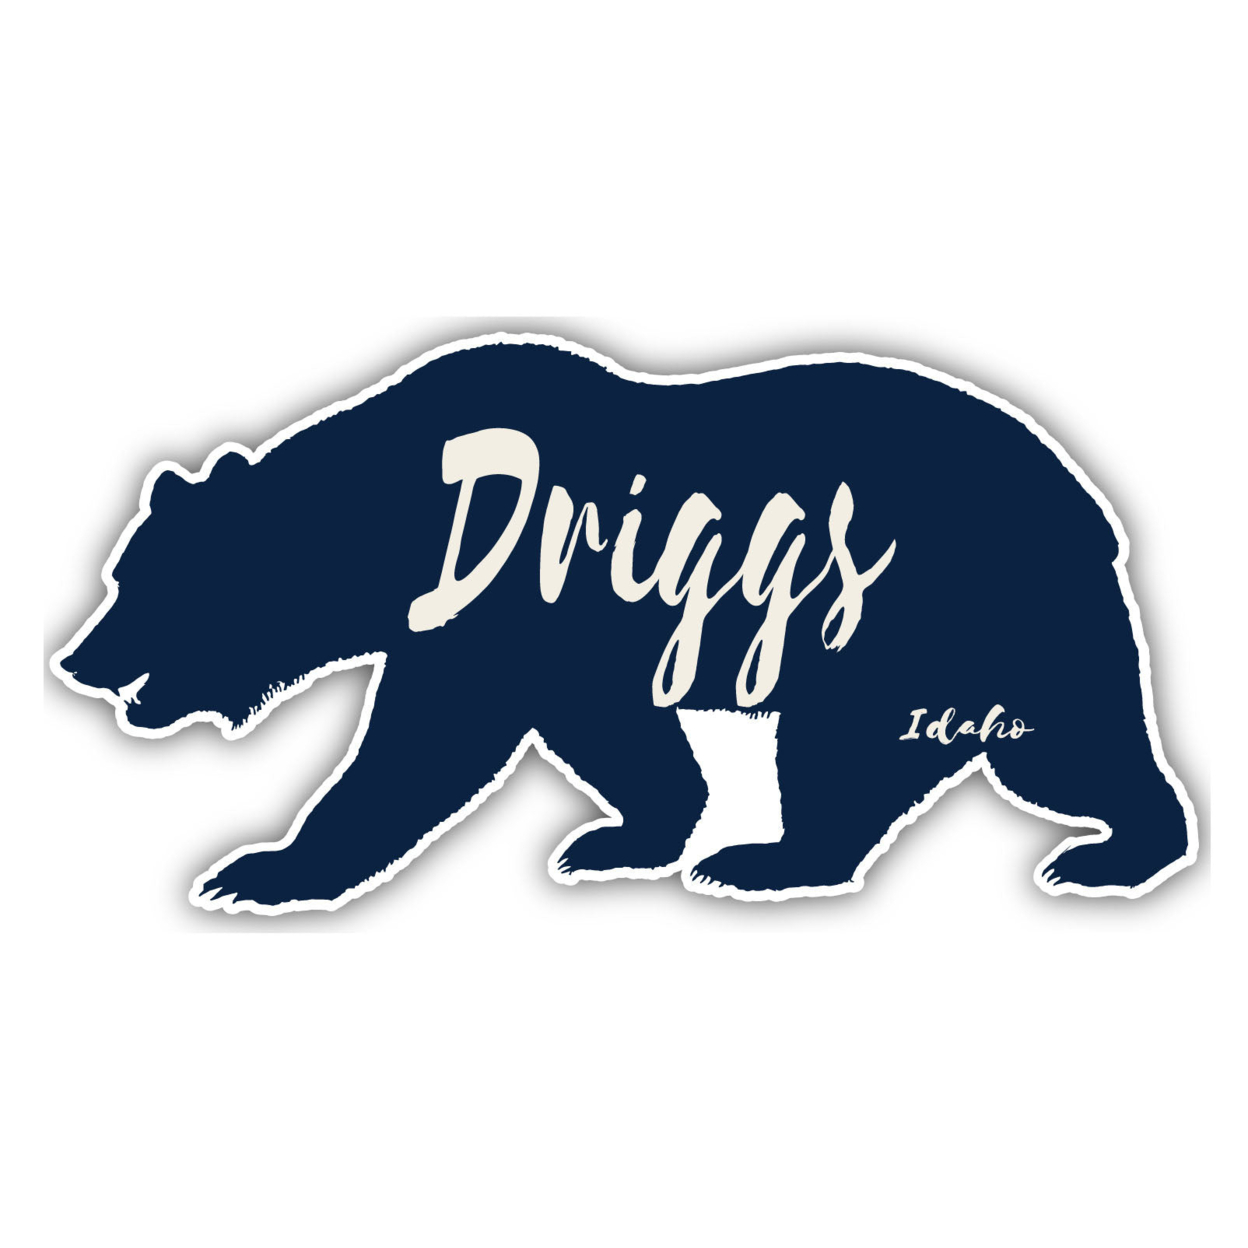 Driggs Idaho Souvenir Decorative Stickers (Choose Theme And Size) - Single Unit, 2-Inch, Adventures Awaits